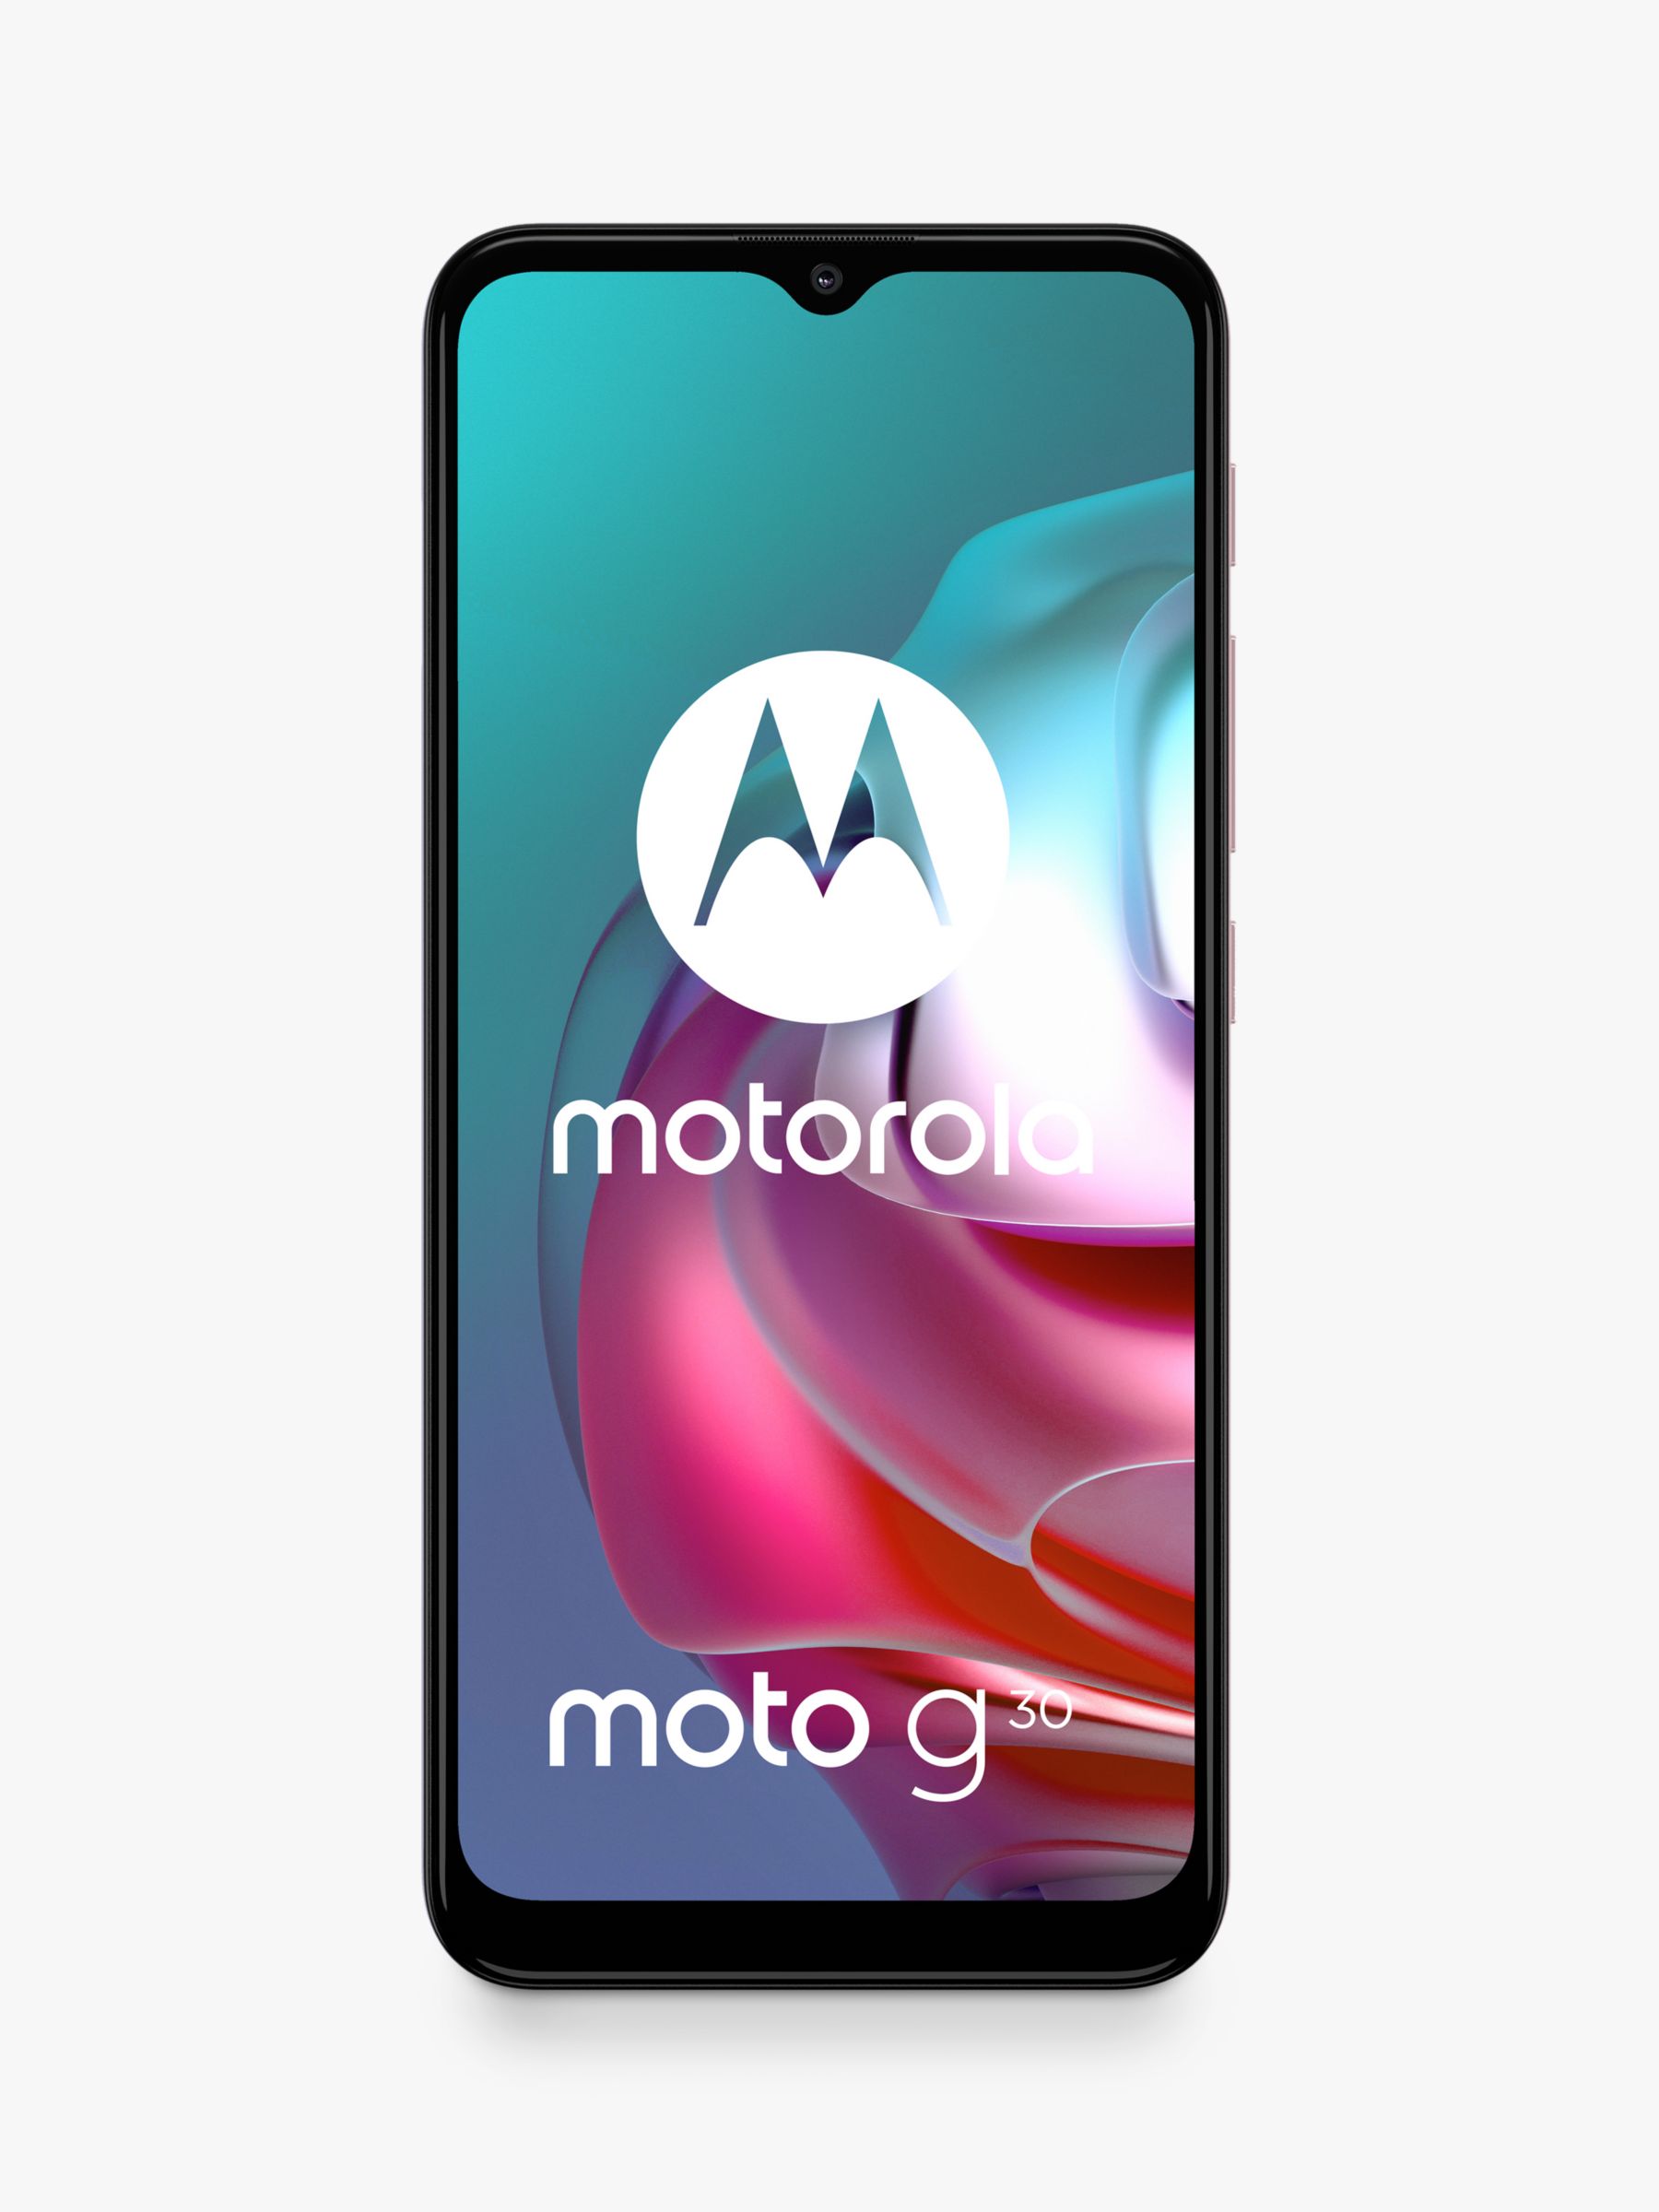 Motorola g30 Smartphone, Android, 4GB RAM, 6.52", 4G LTE, SIM Free, 128GB, Pastel Sky